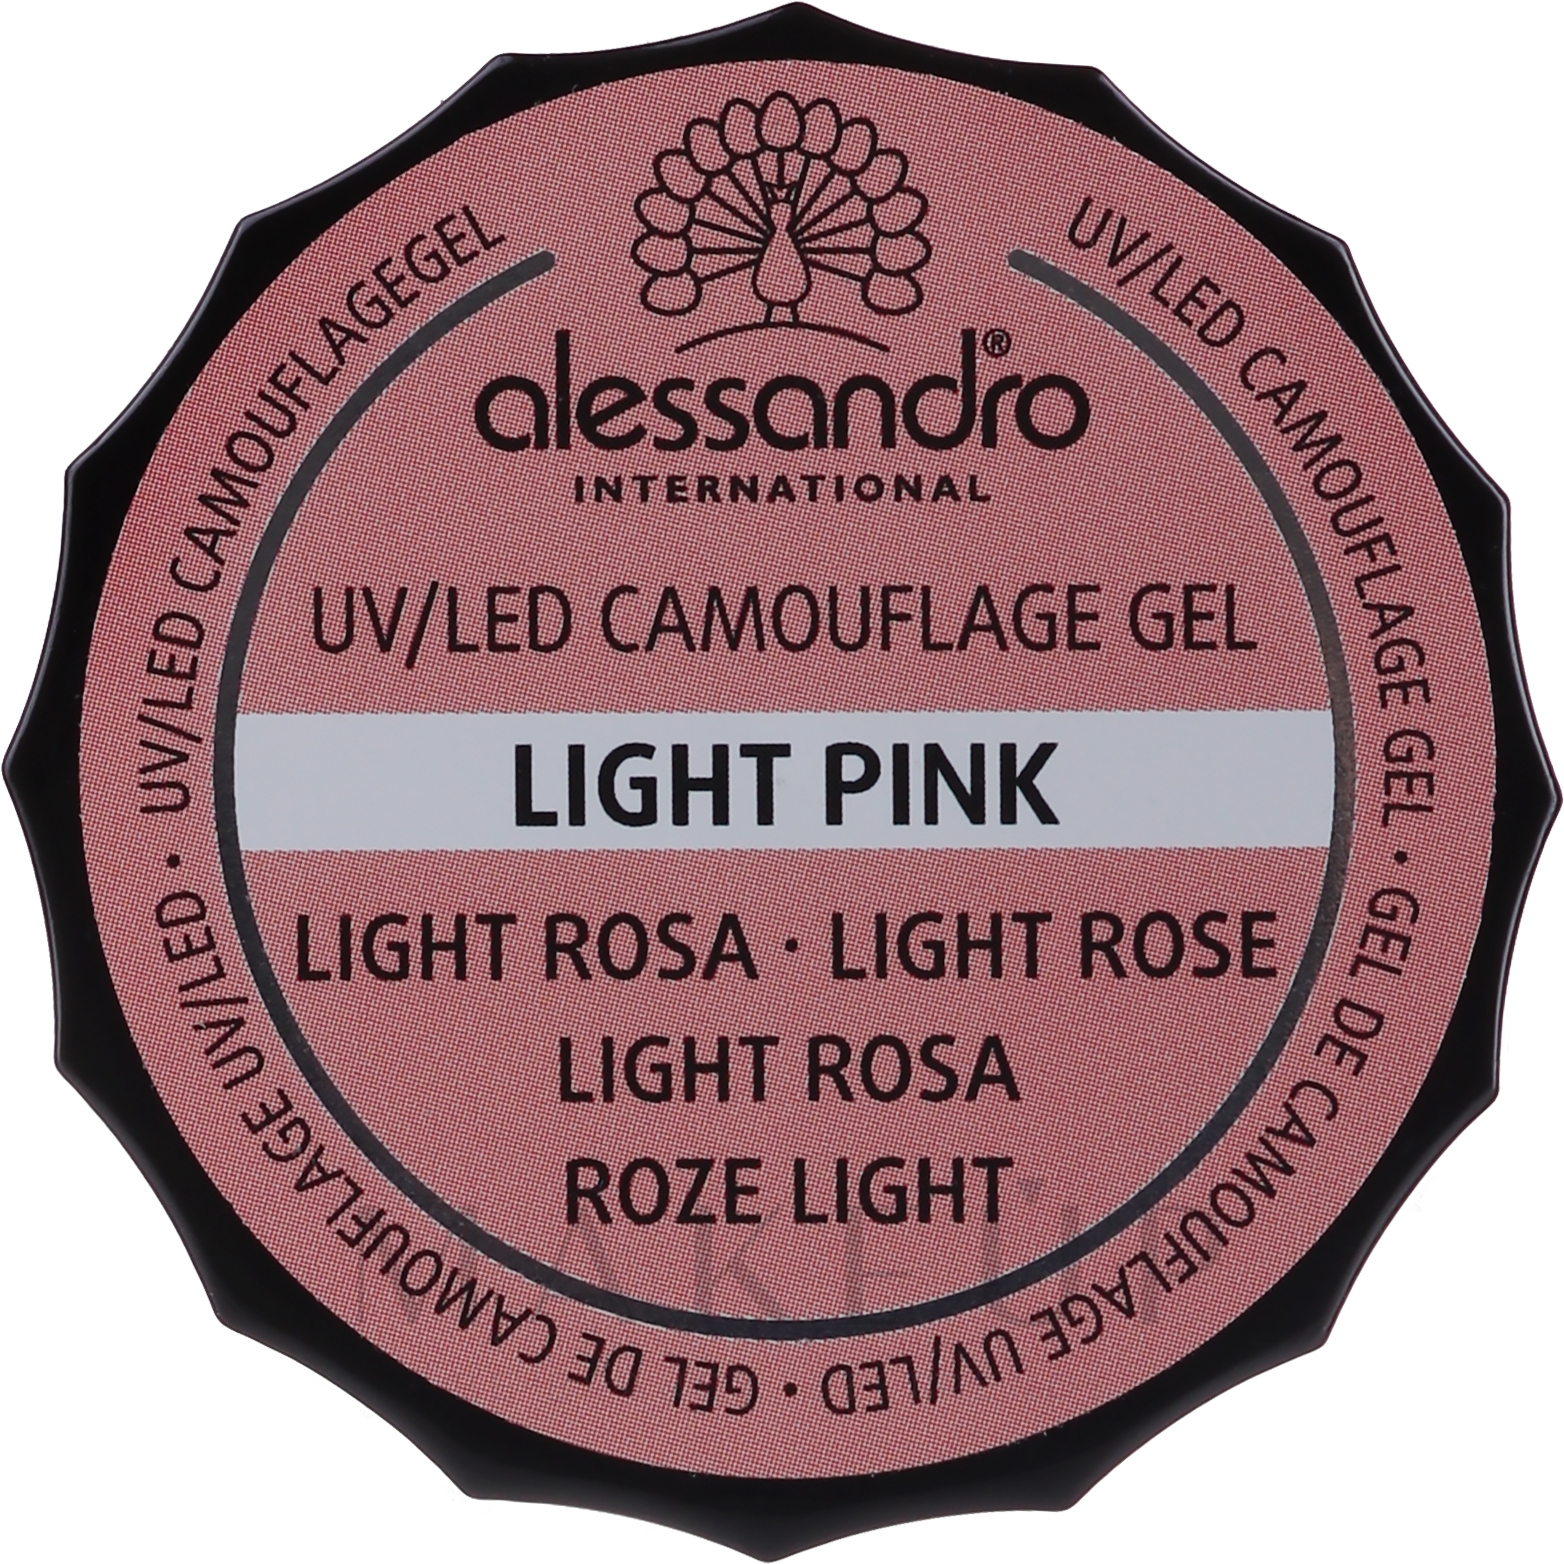 Nagelgel mit Camouflage-Effekt - Alessandro International Camouflage Gel Nature Rose — Bild Light Pink